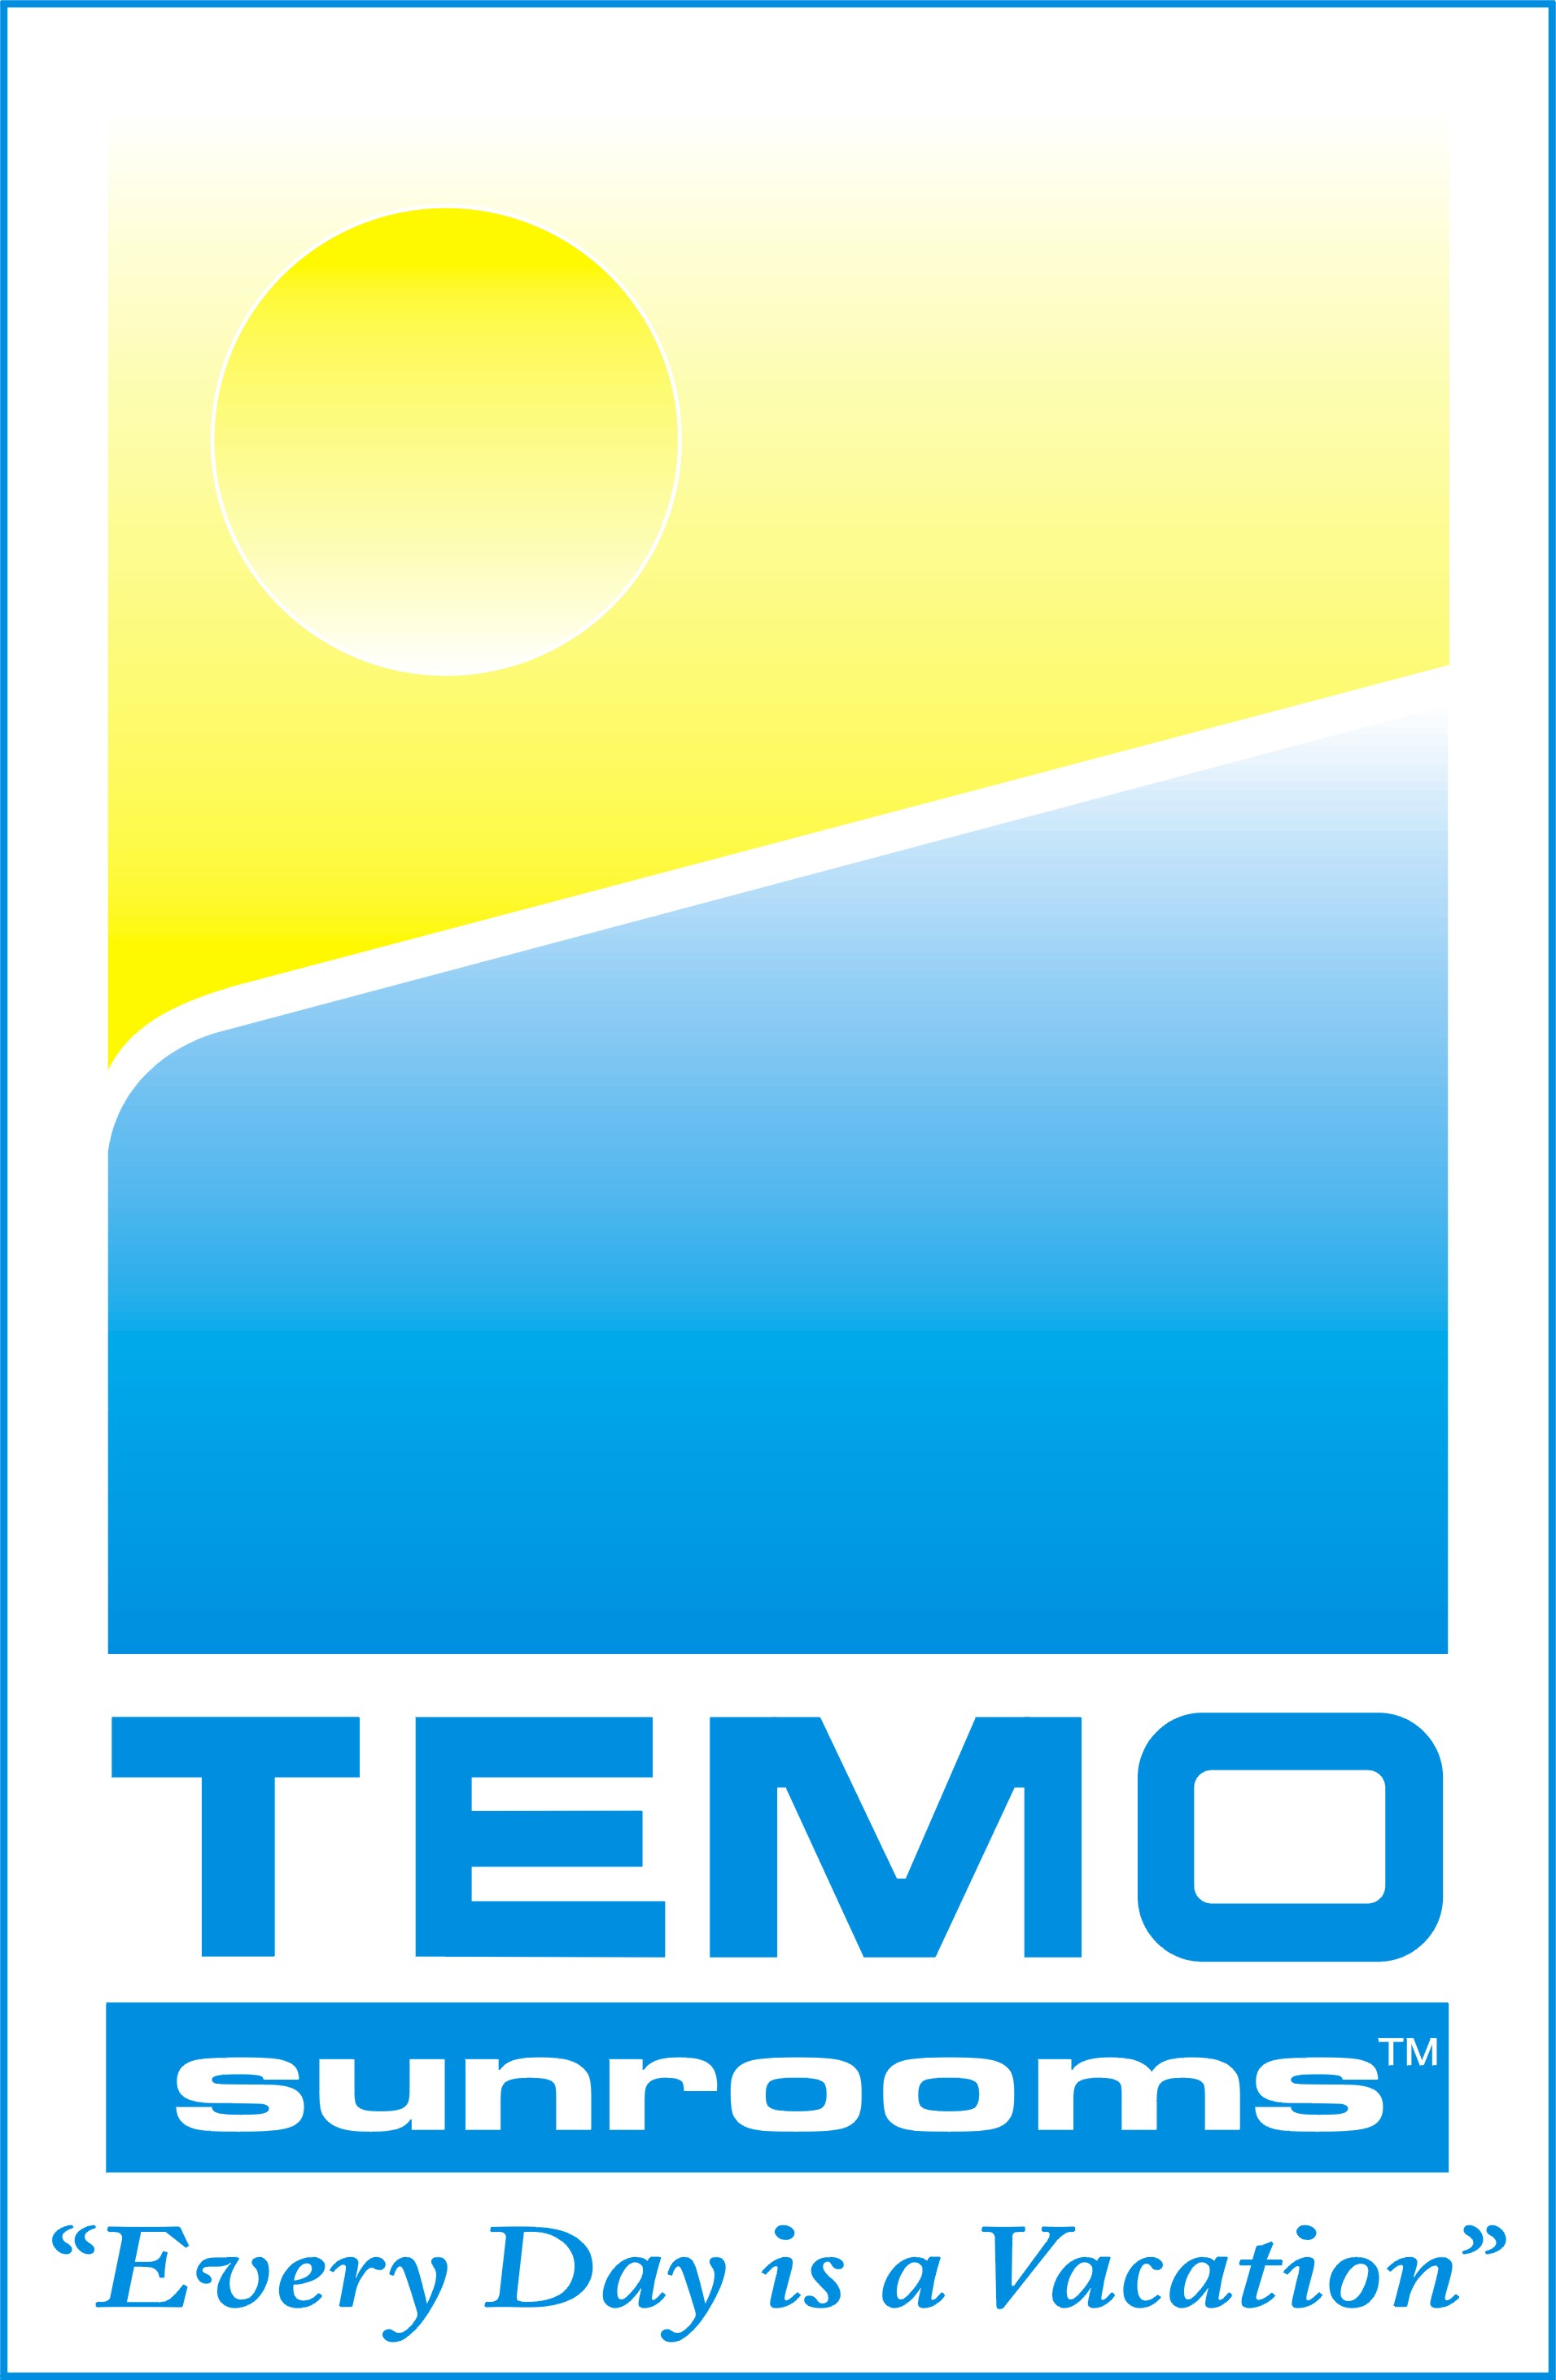 Temo Backyard Living Logo